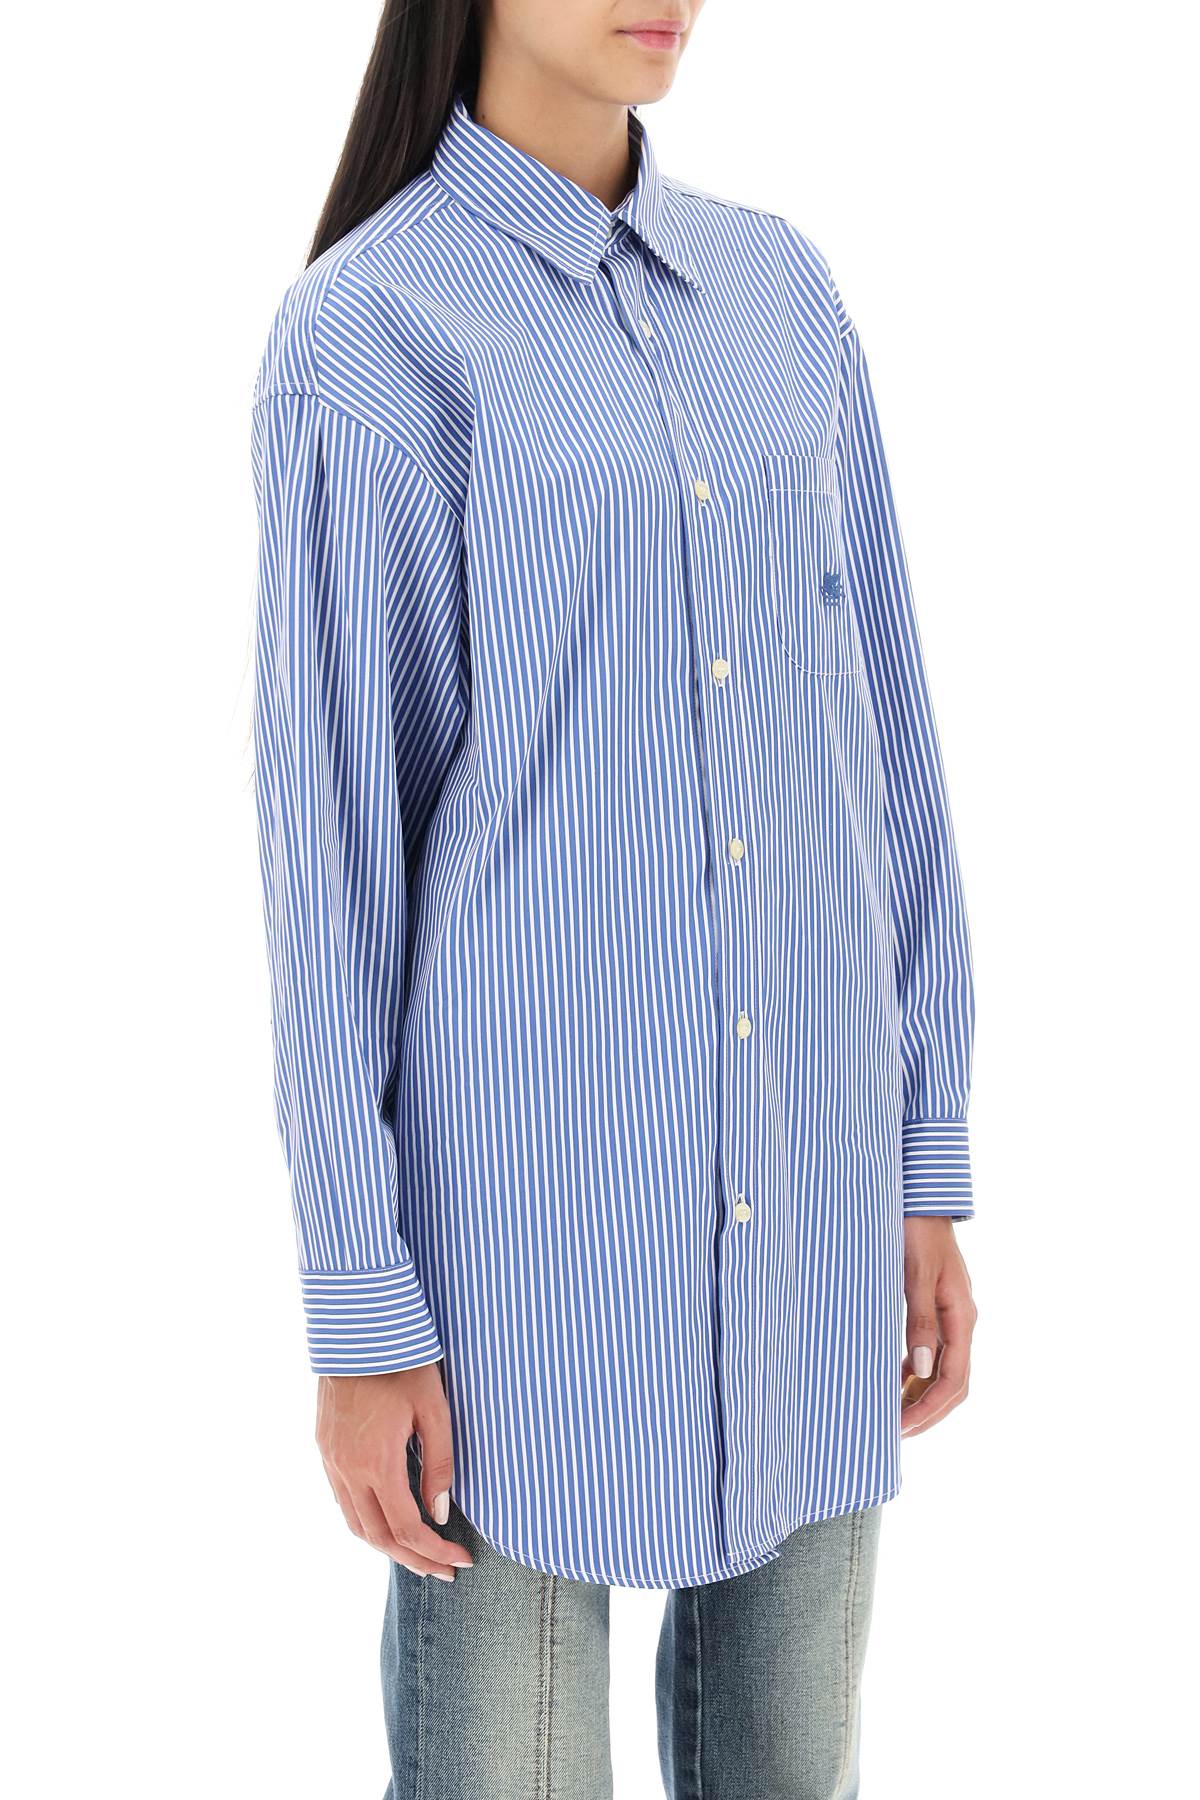 Etro striped poplin shirt-1